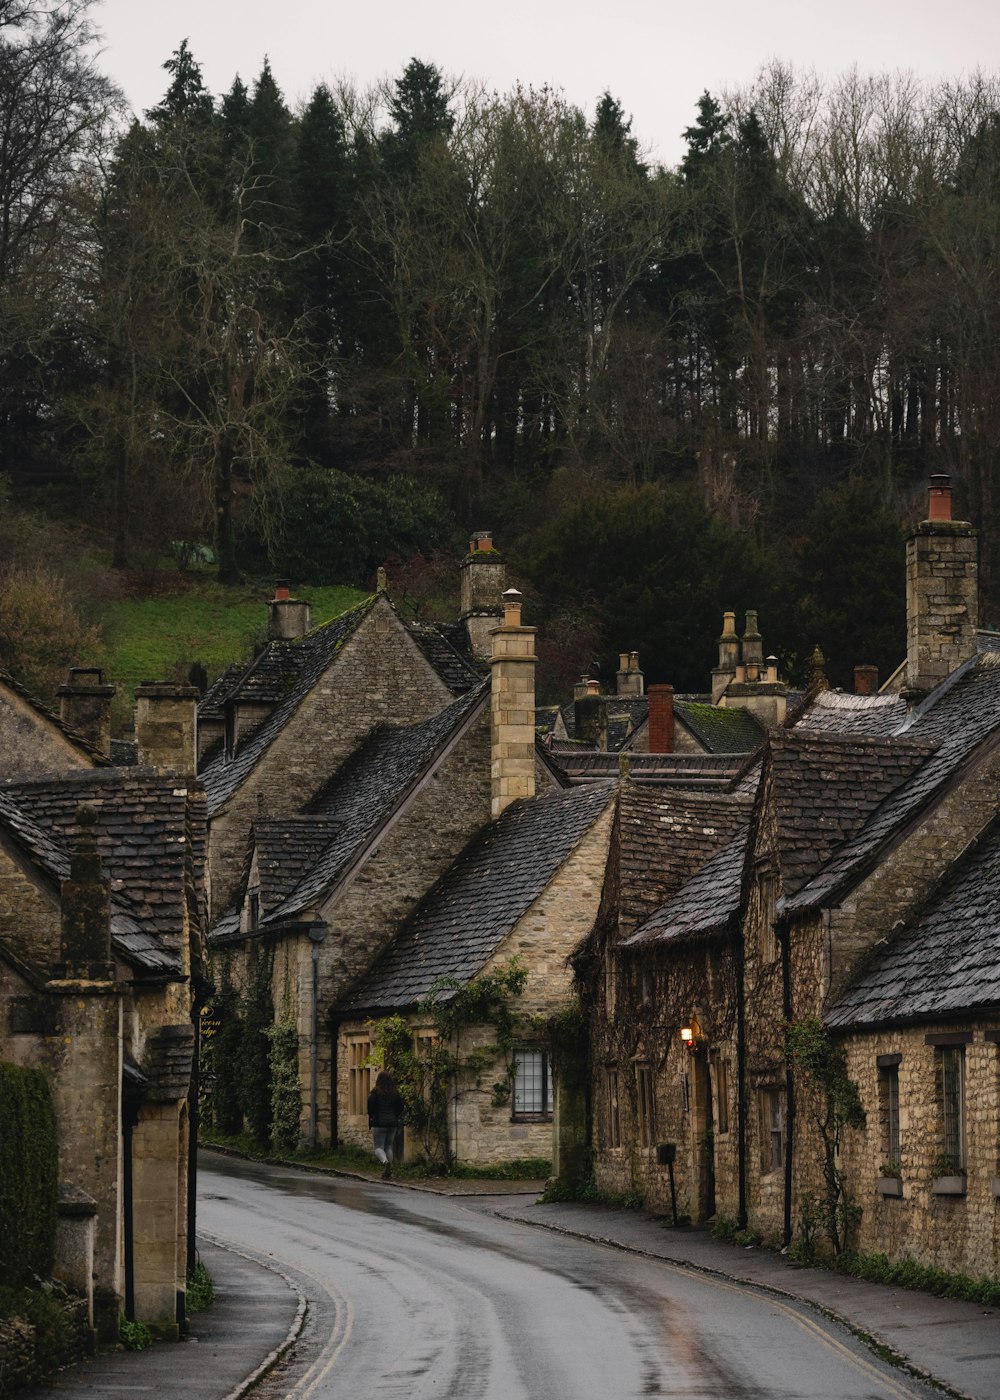 una strada fiancheggiata da case in pietra in una zona rurale